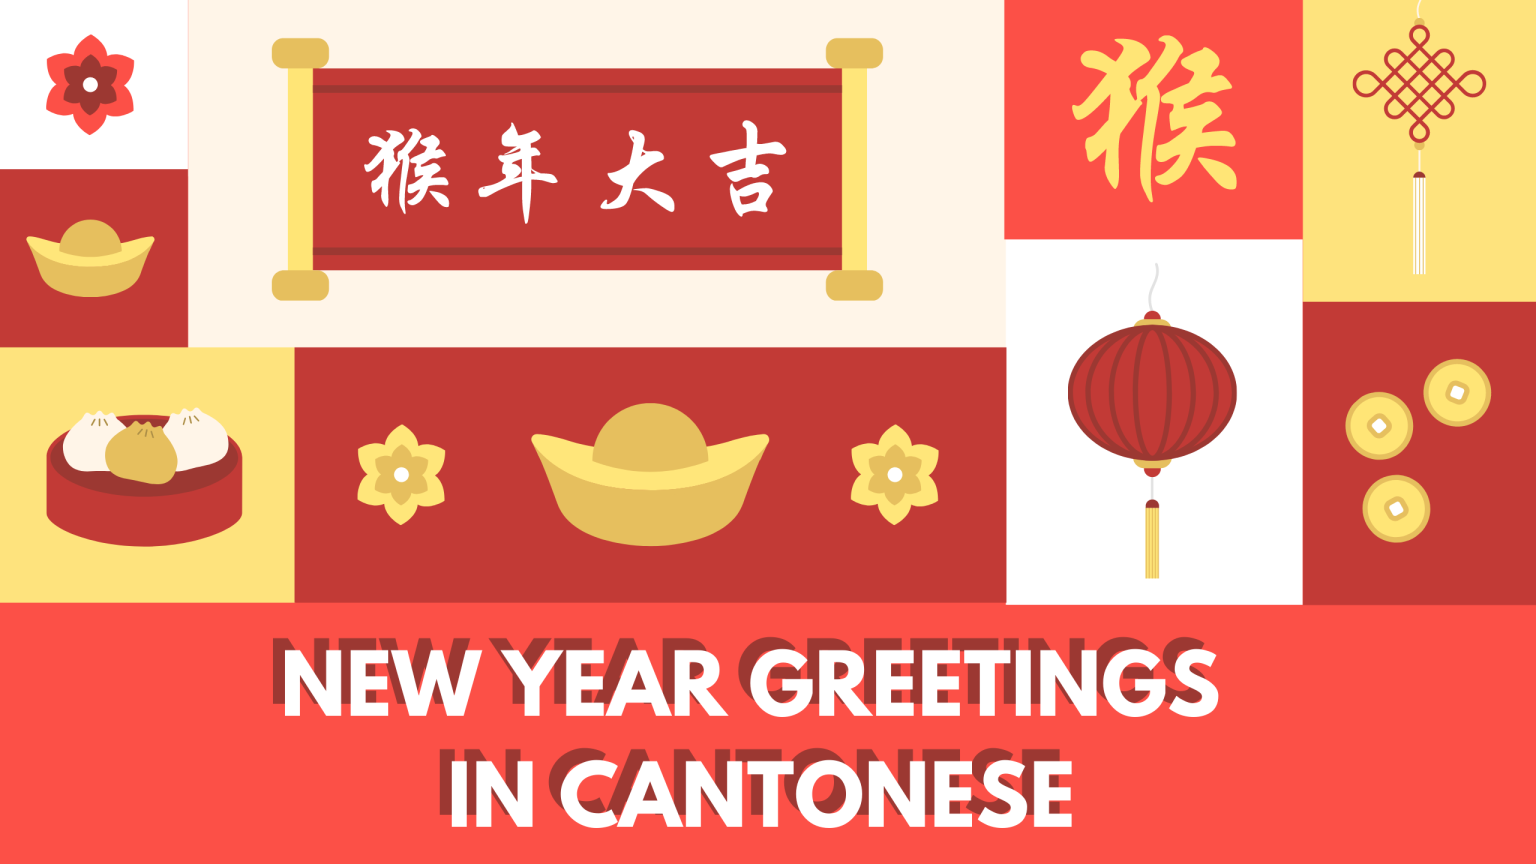 cantonese-new-year-greetings-8-popular-ways-ling-app